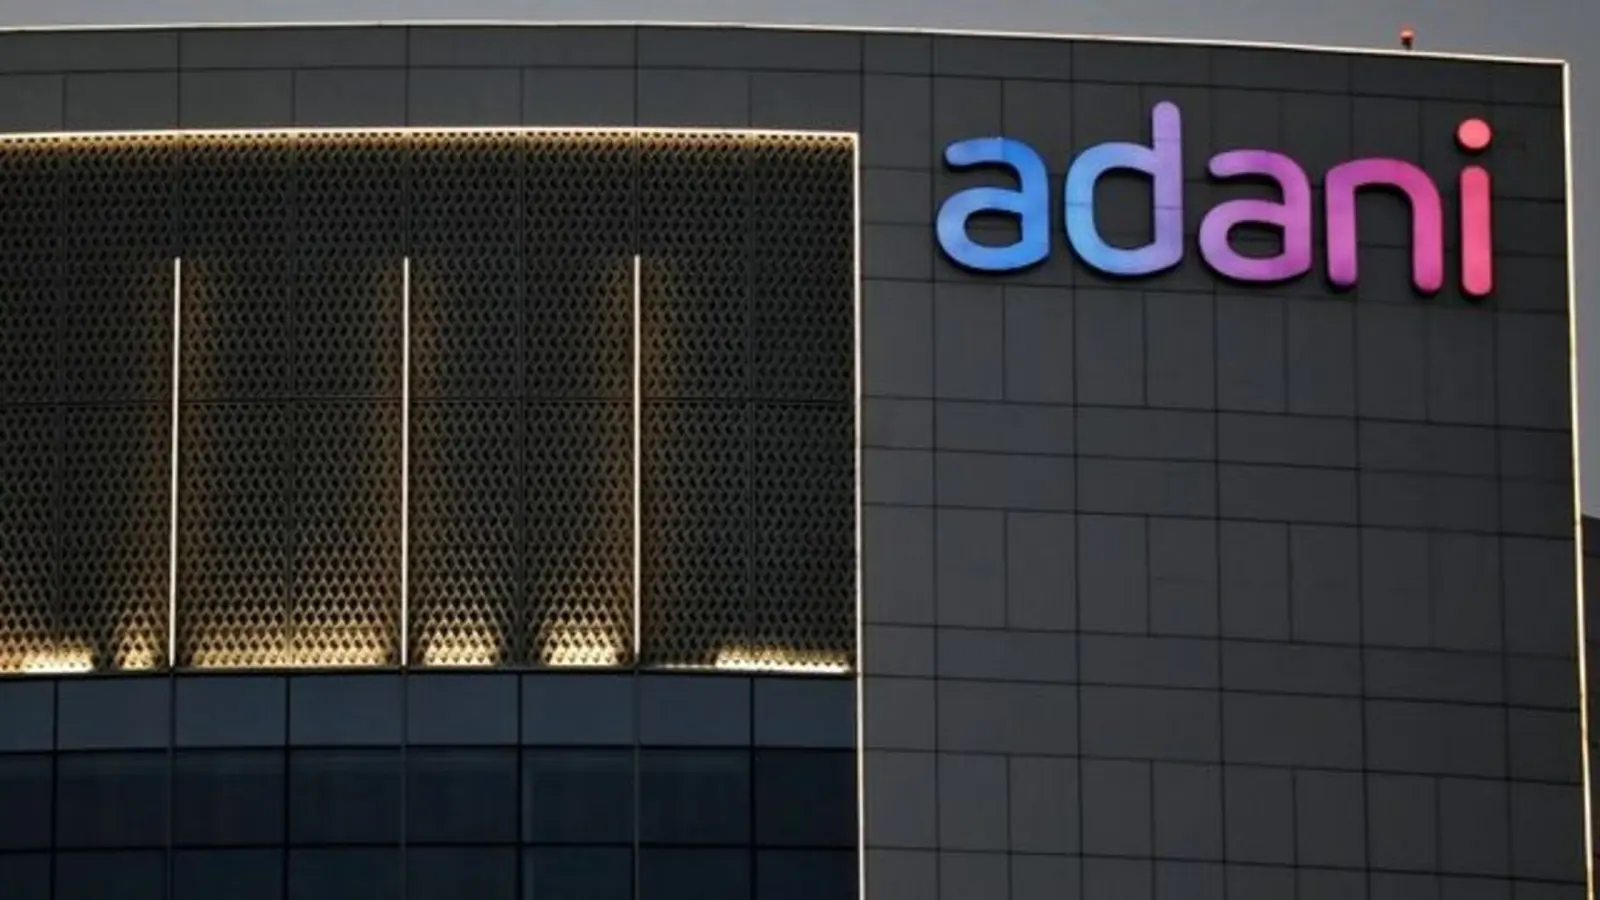 Adani, Asia’s richest, is bidding for 5G telecom spectrum auction